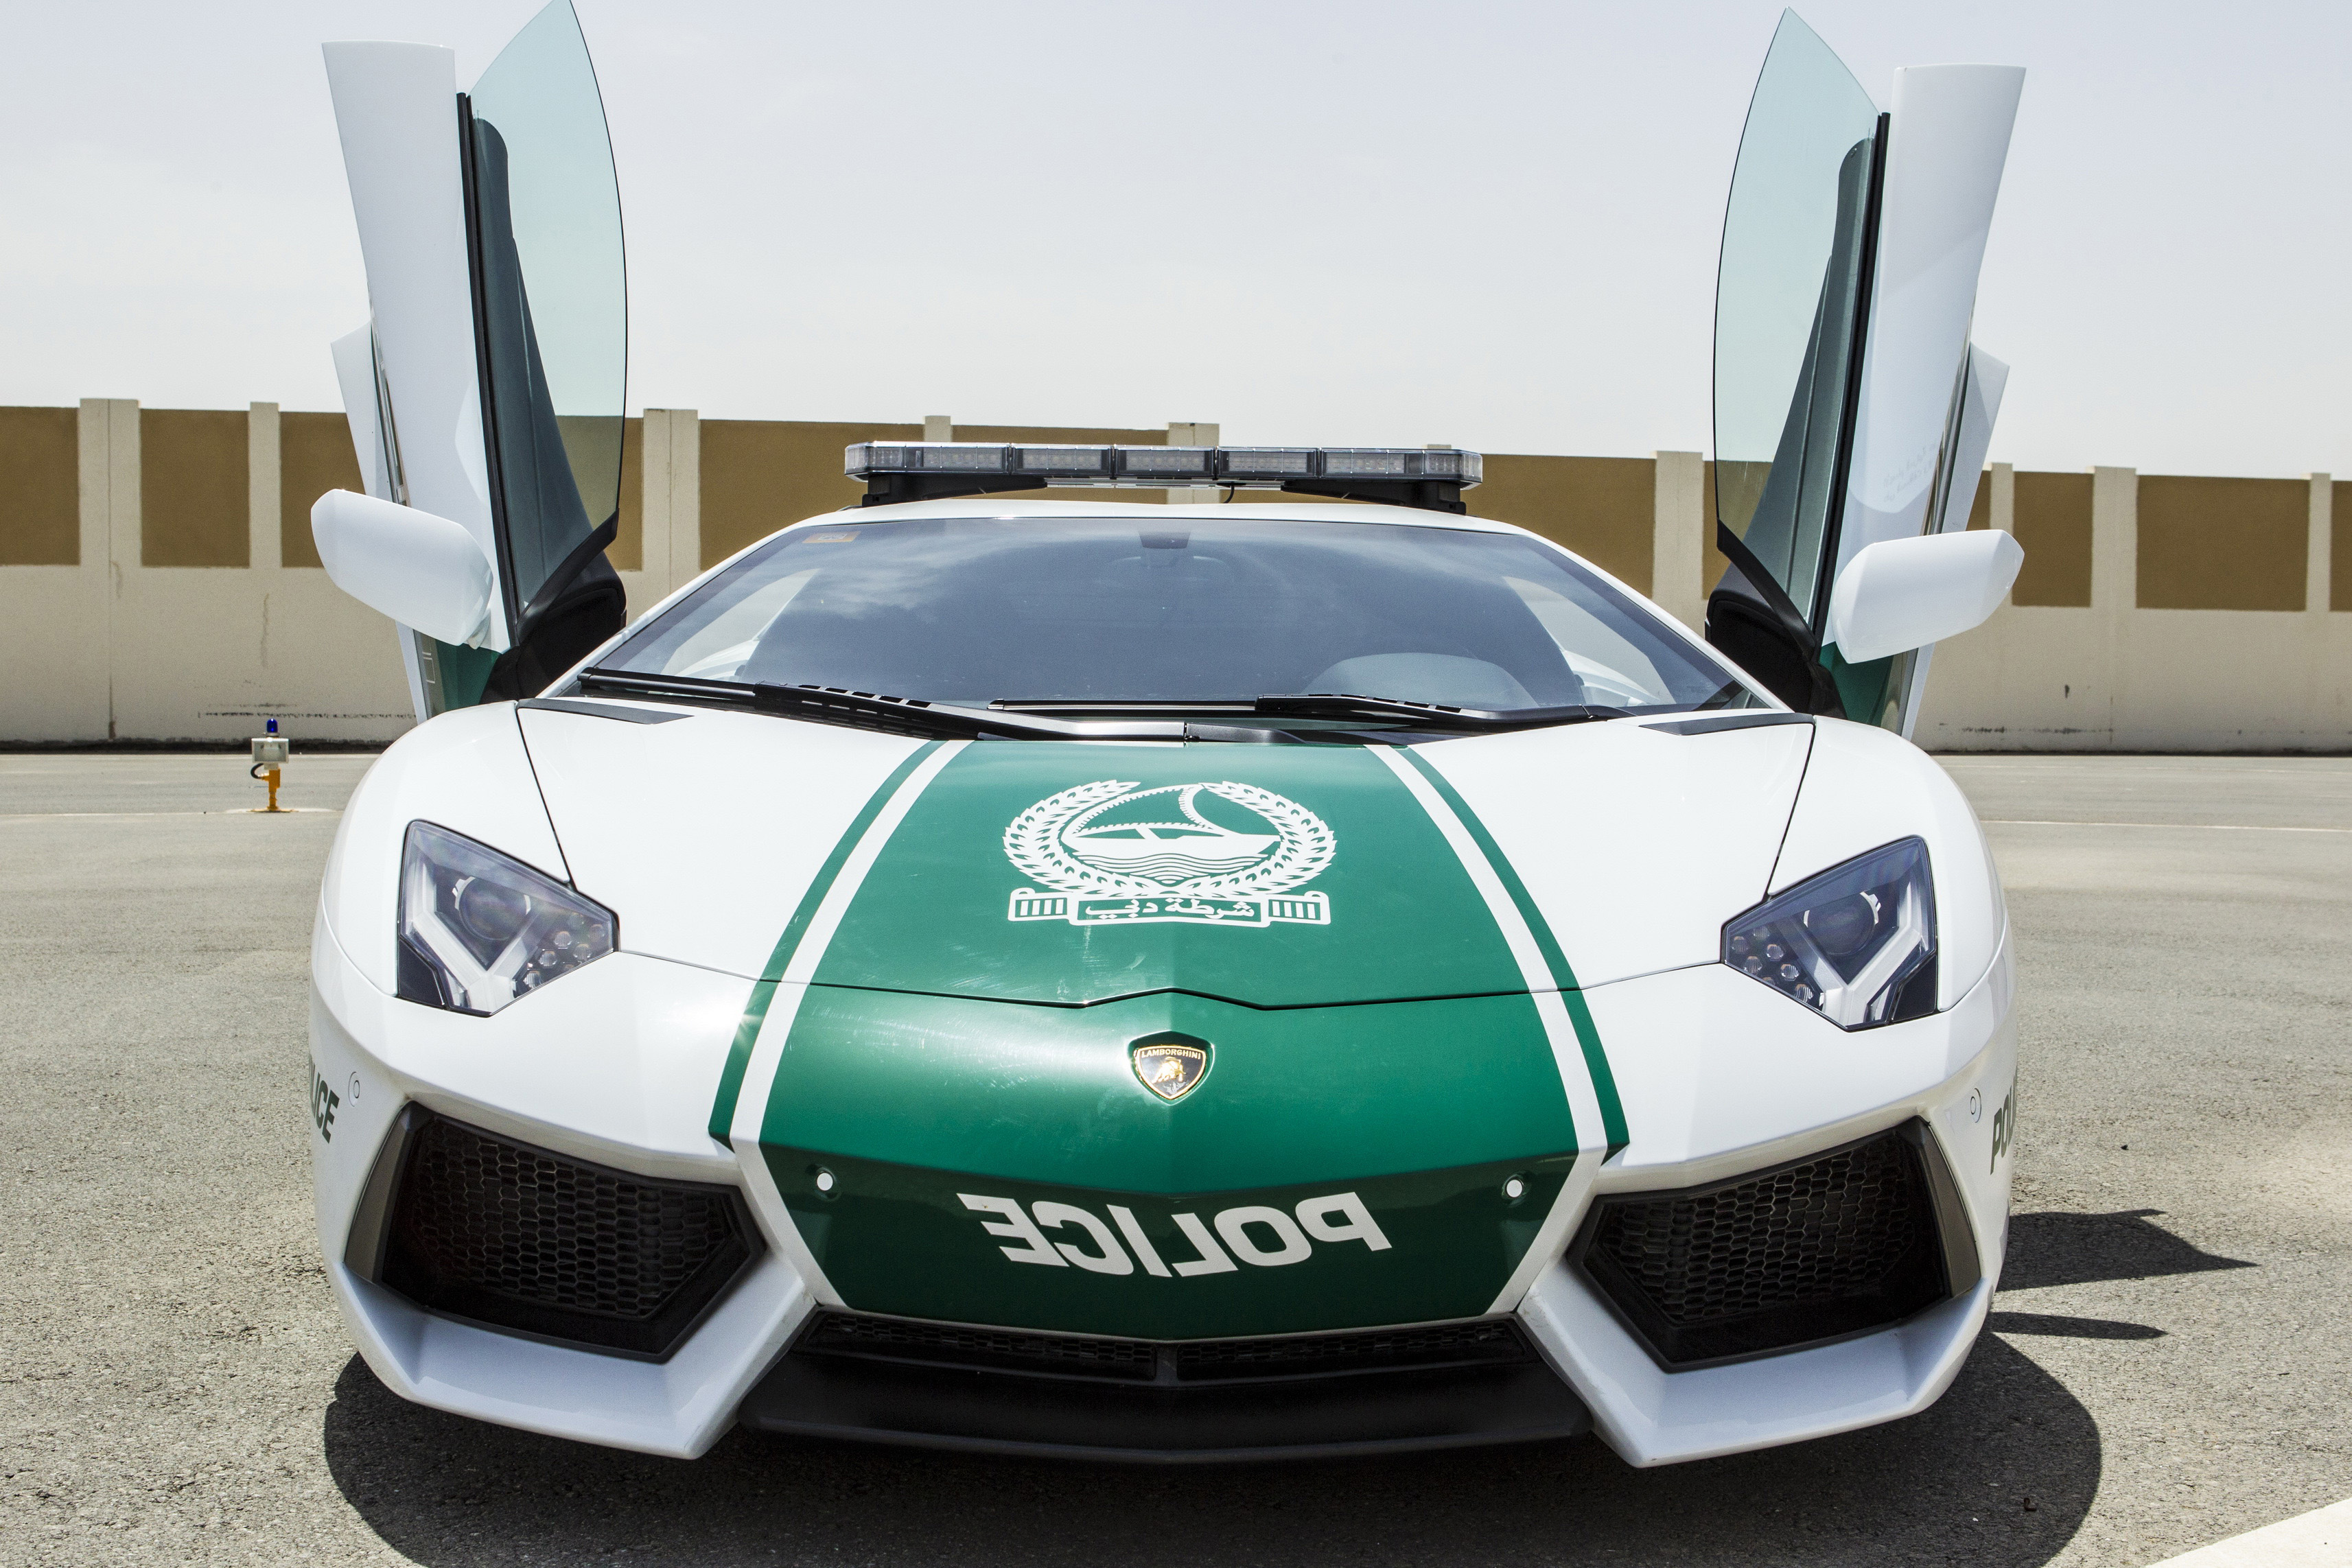 High Resolution Wallpaper | Uae Dubai Police Lamborghini 3427x2285 px